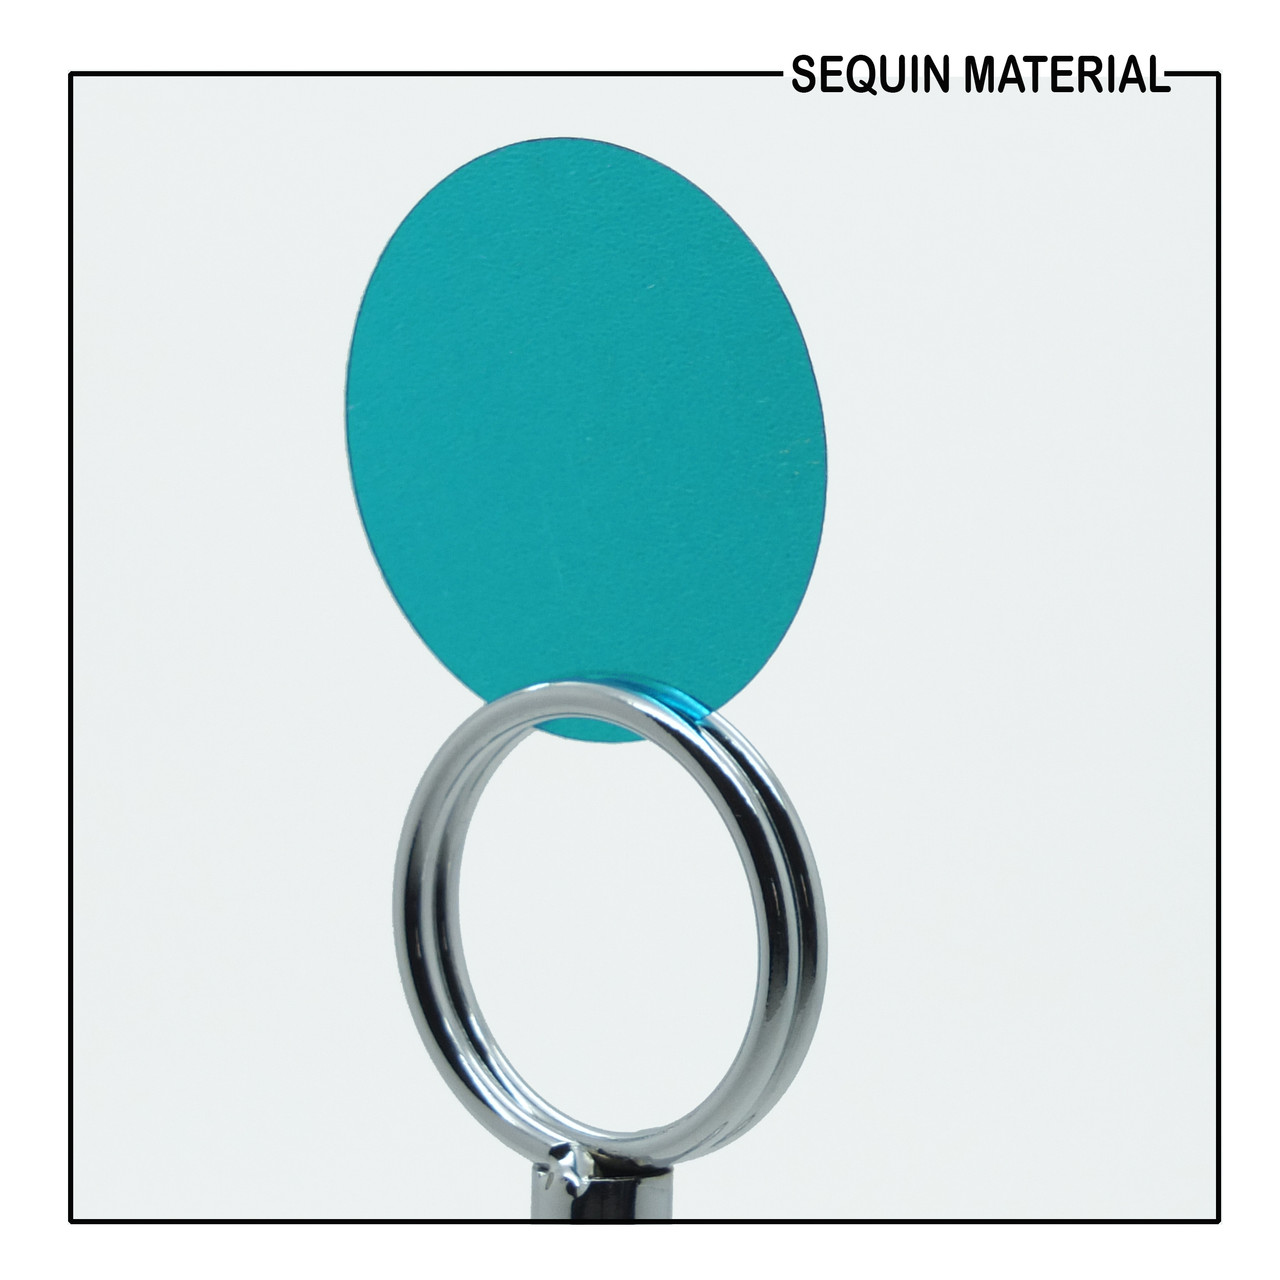 SequinsUSA Rich Teal Green Shiny Metallic Sequin Material Film RL363